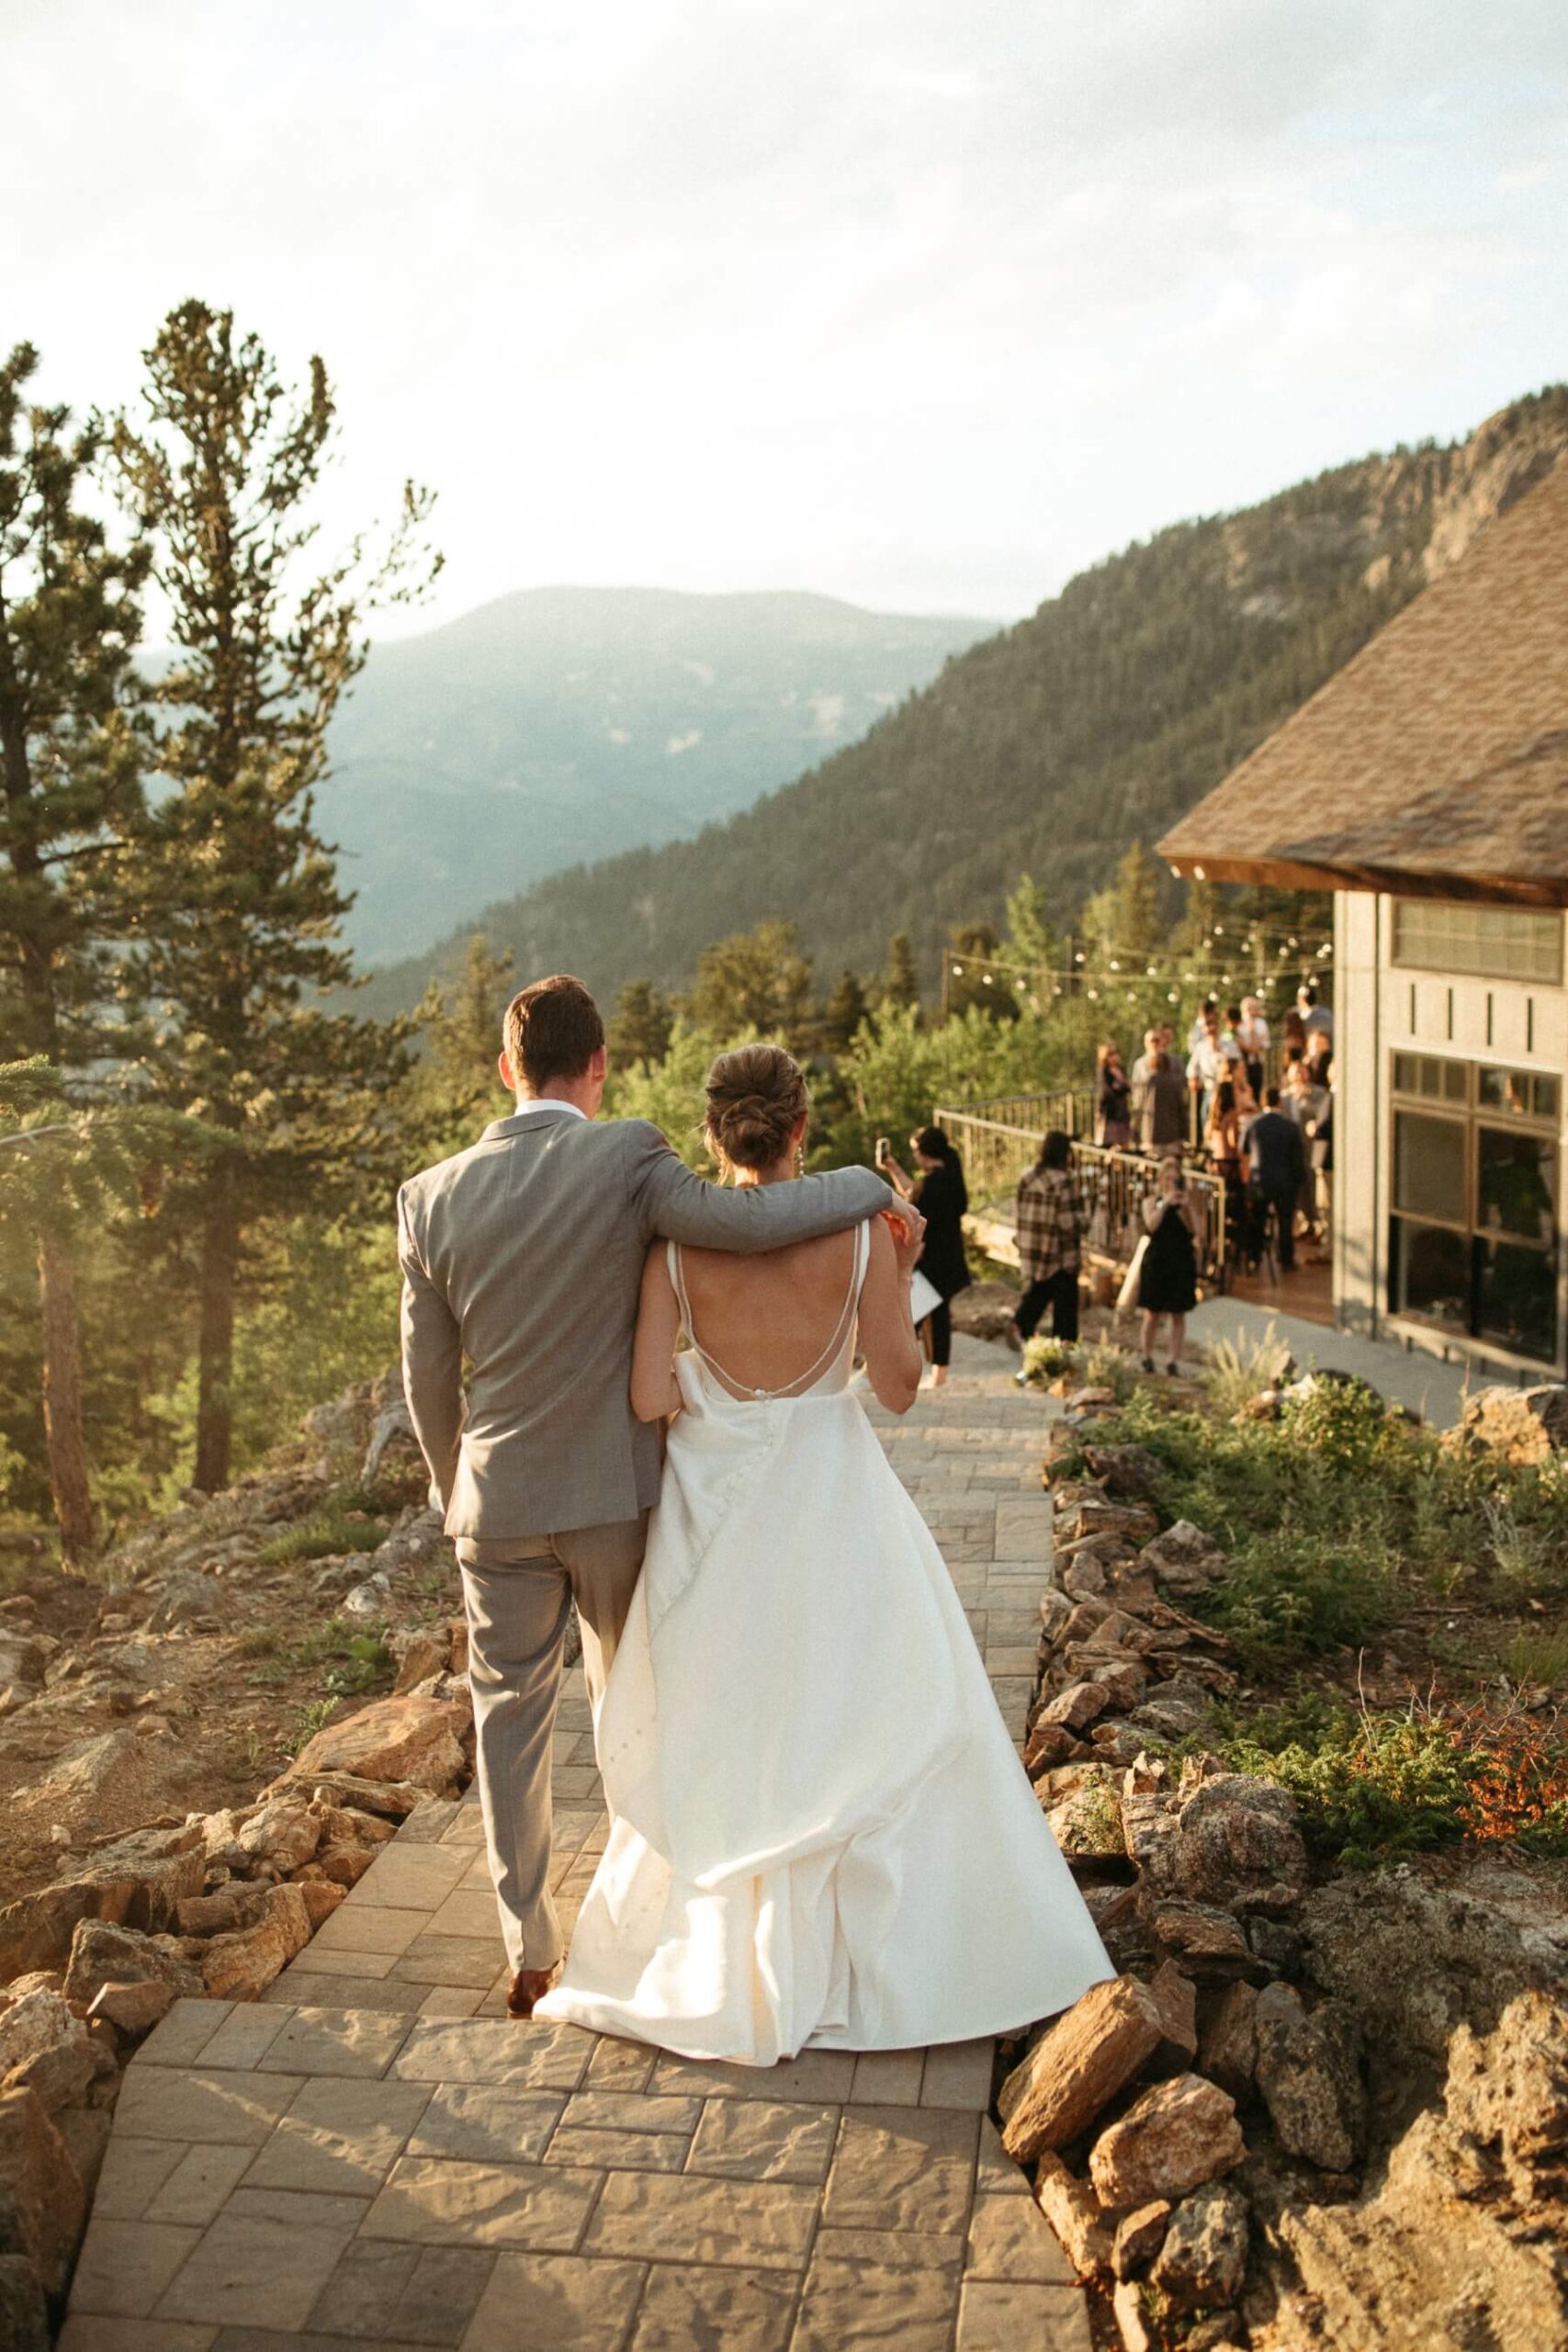 Groom walking with his arm over bride's shoulder back to reception at North Star Gatherings, a Colorado mountain wedding venue